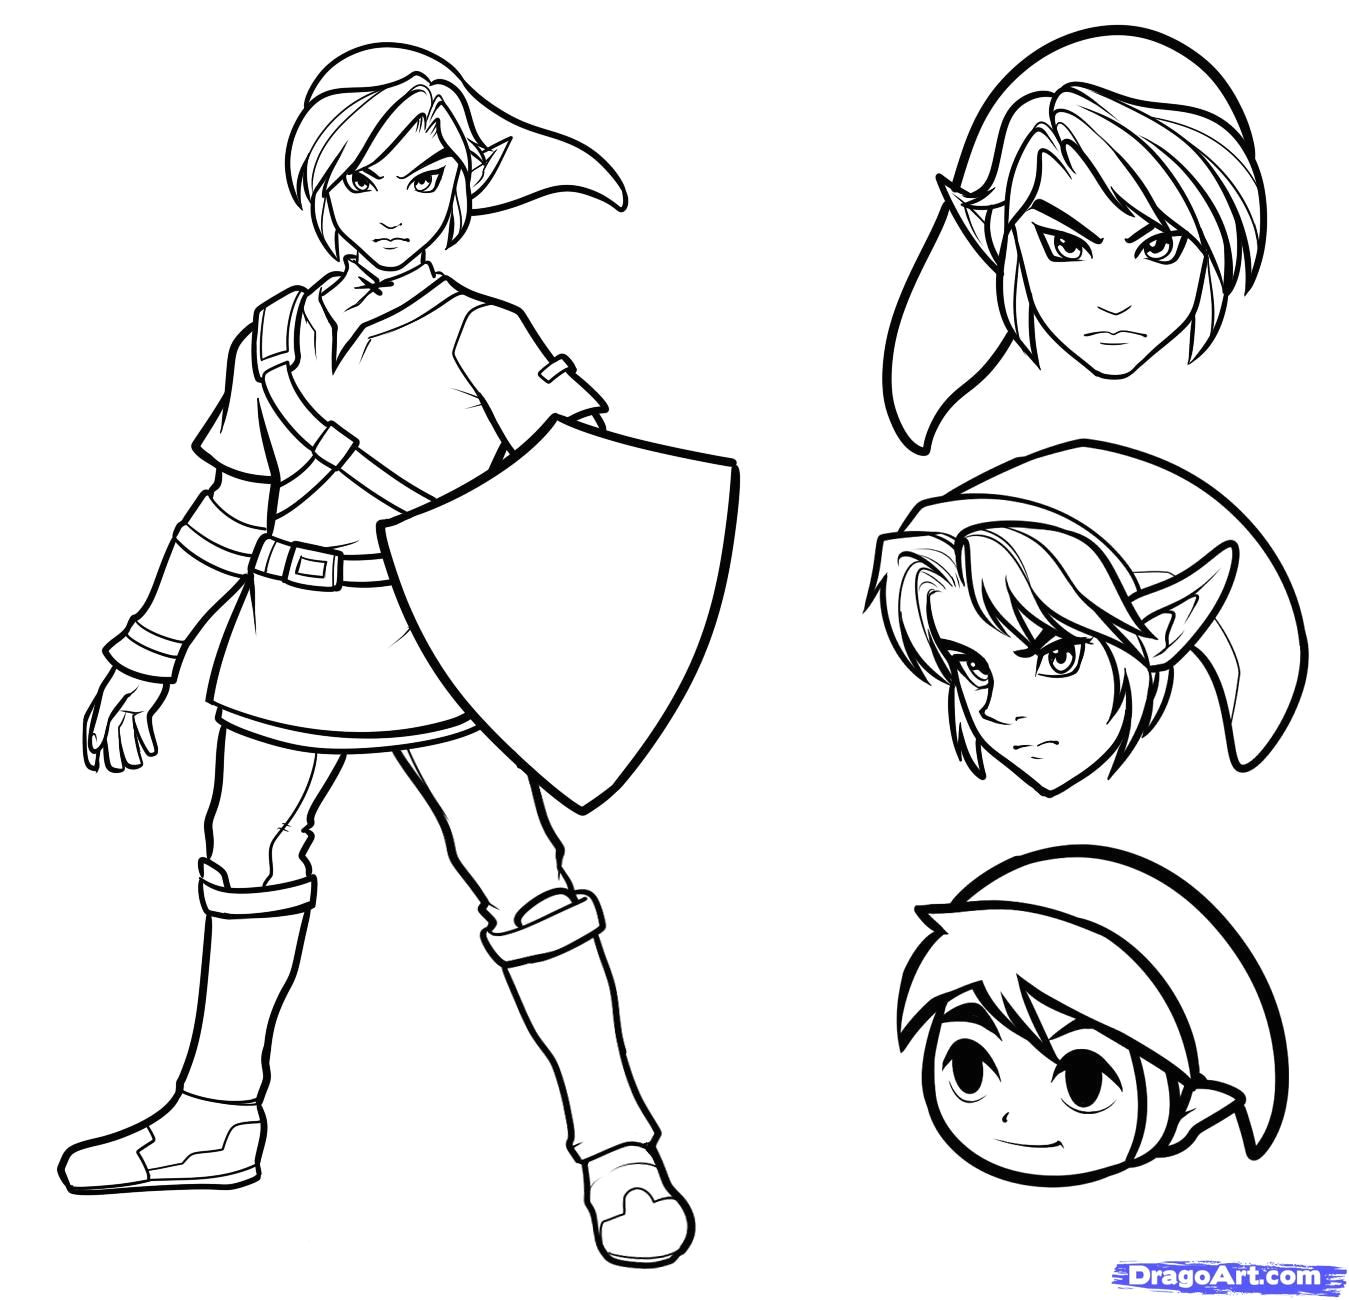 Easy Drawings Of Zelda How to Draw Link Easy Step 9 Phots Drawings Easy Drawings